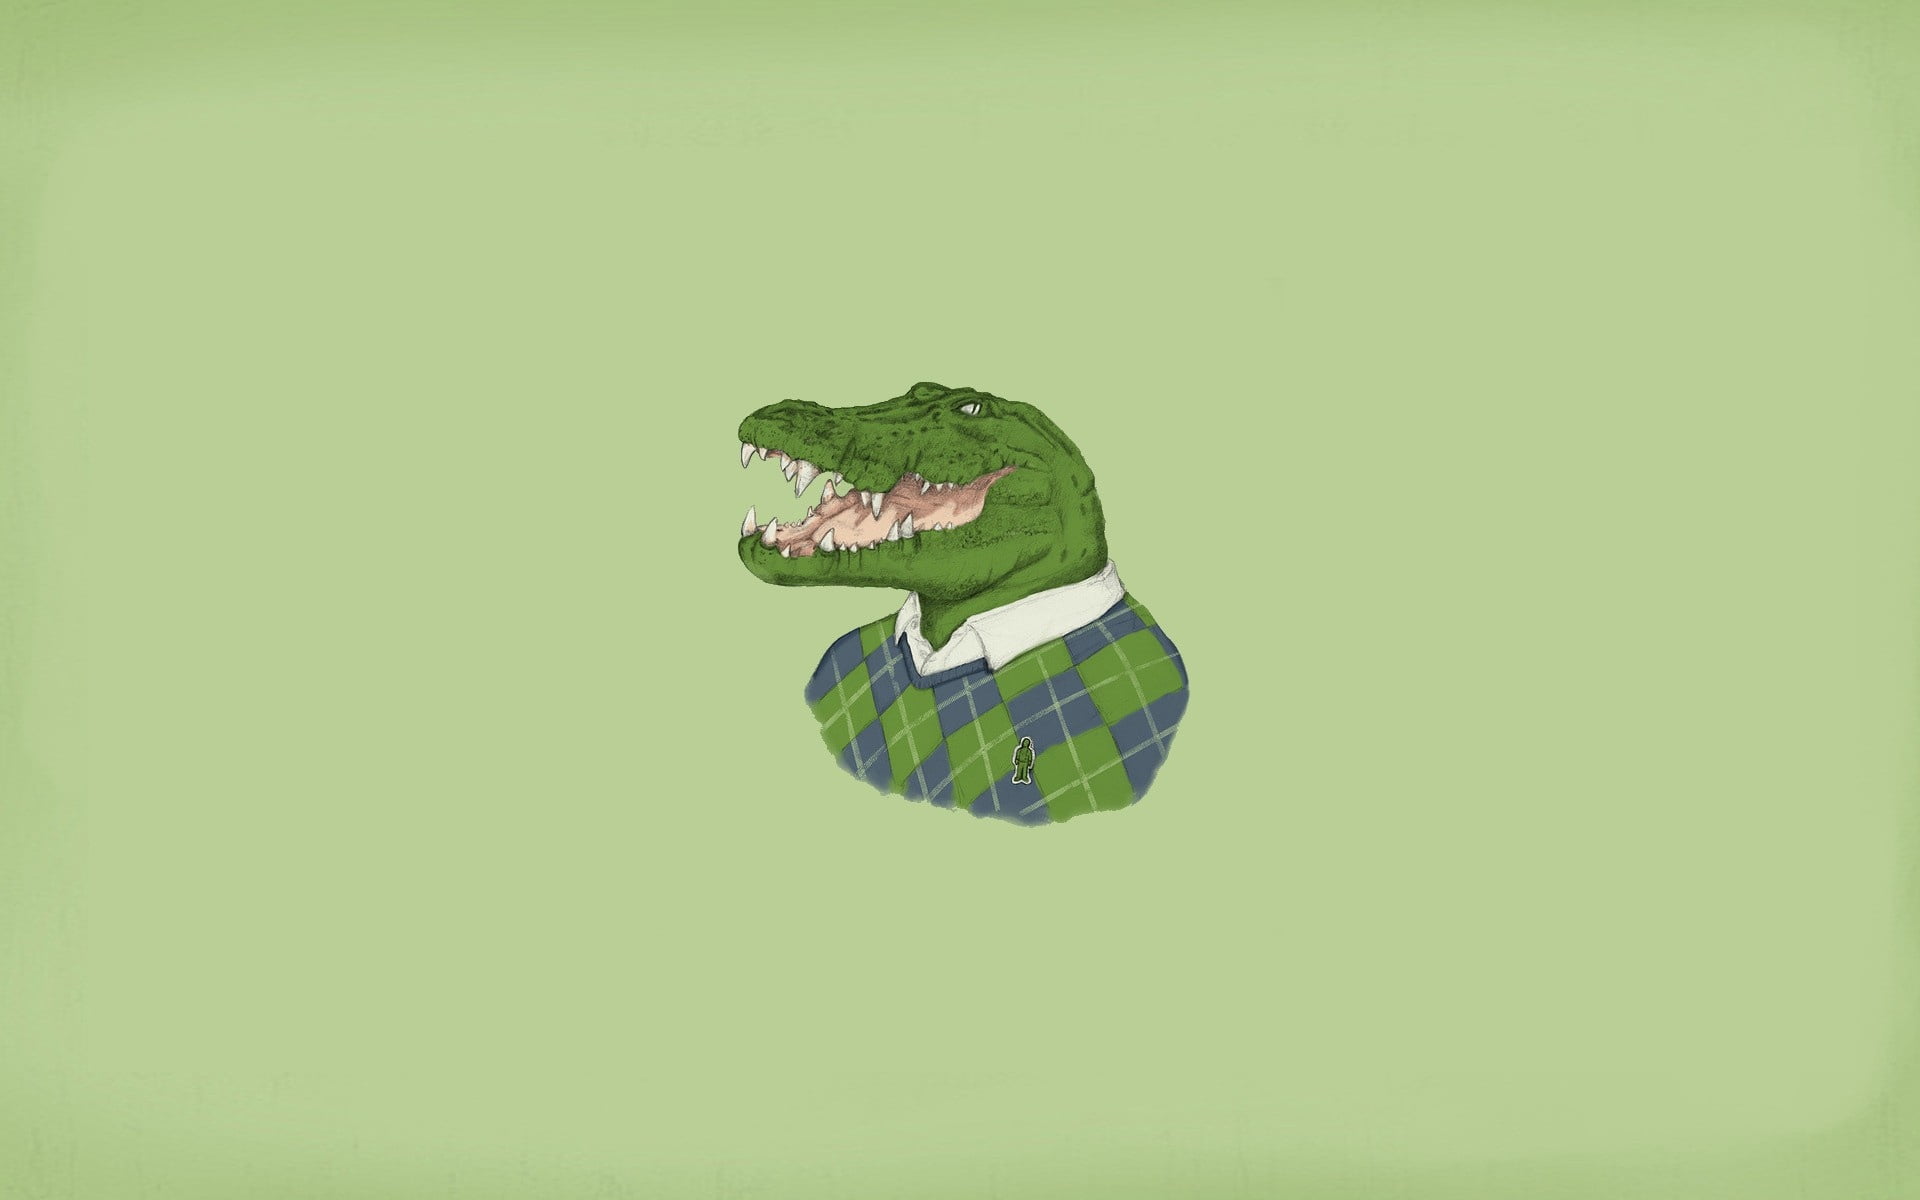 green crocodile wearing shirt illustration, minimalism, lacoste